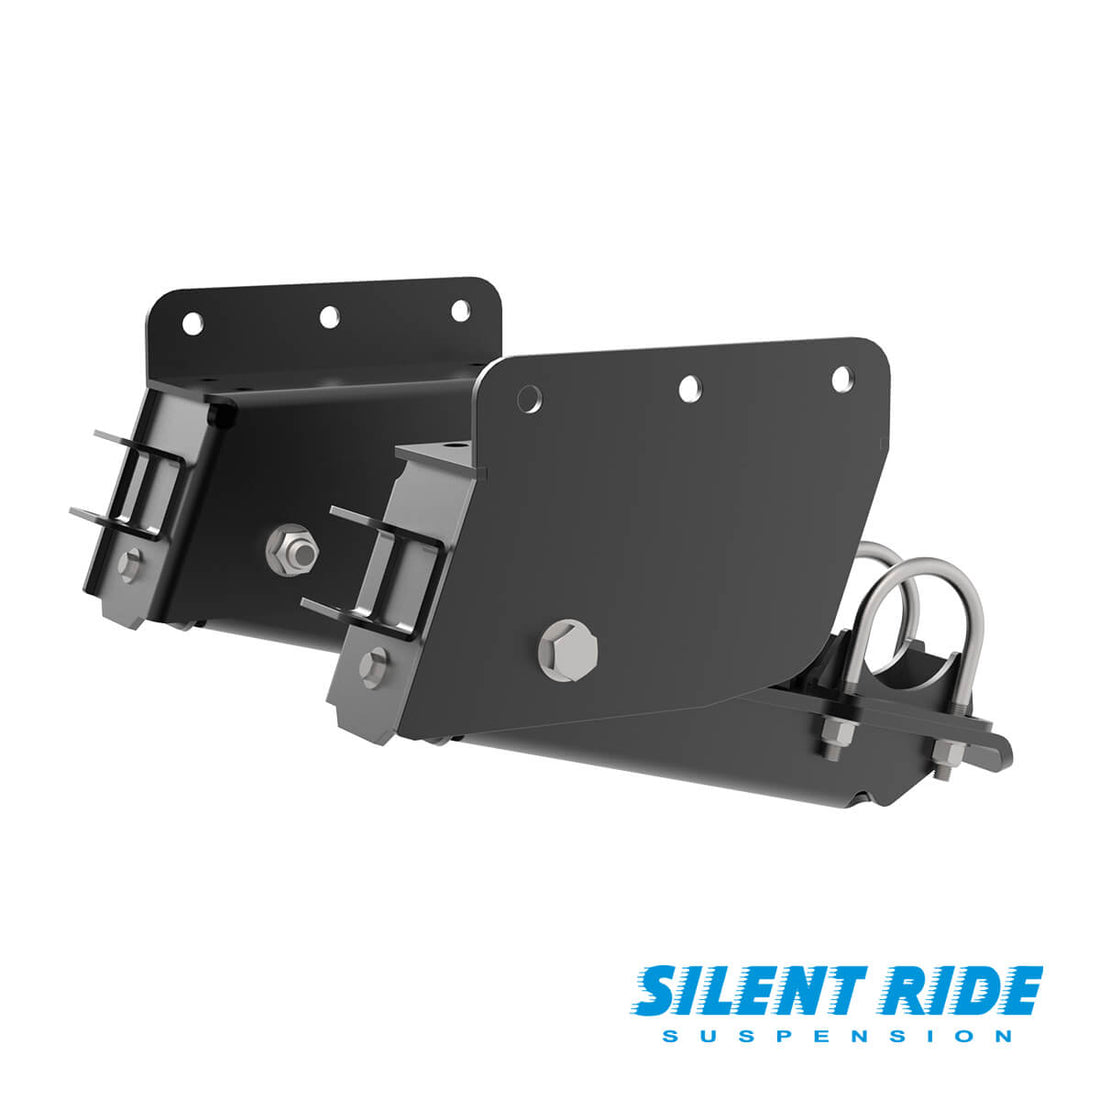 7000 lb Single Axle Silent Ride Trailer Suspension